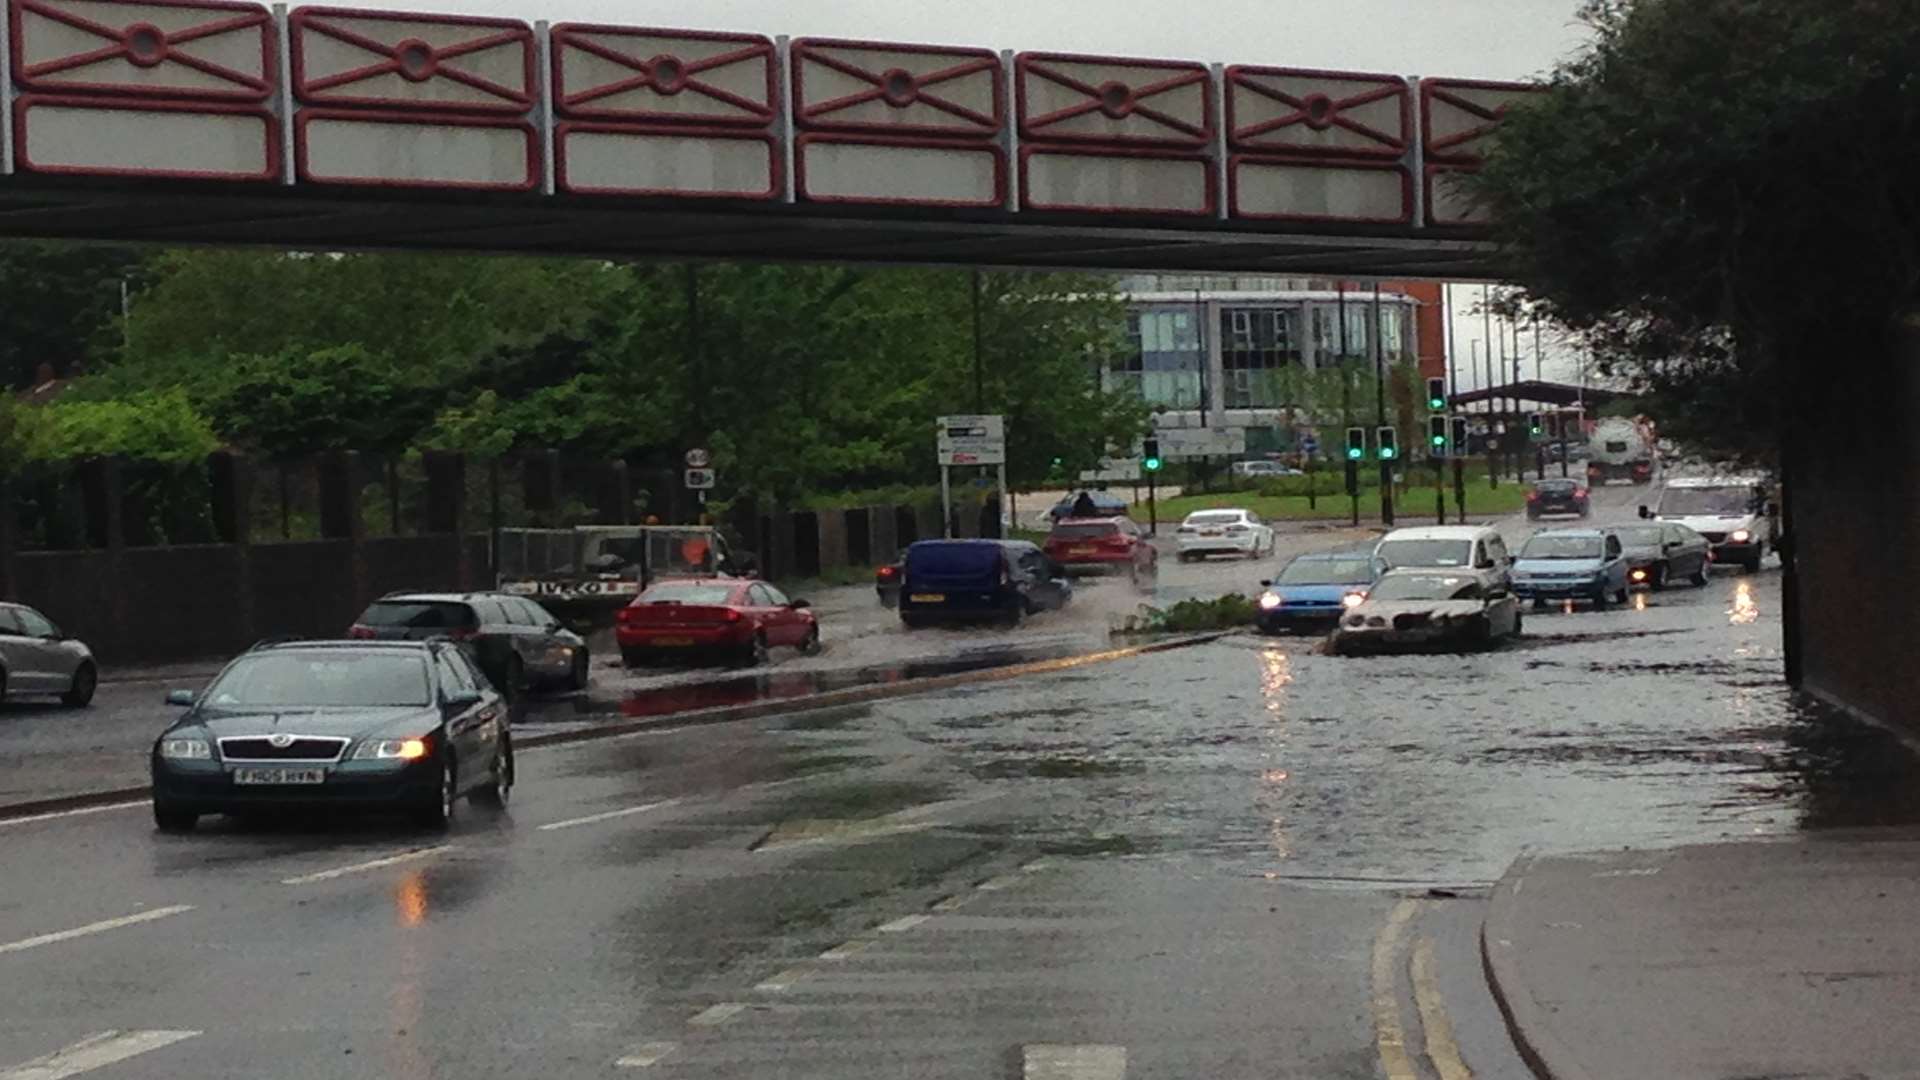 Flooding in Pier Road, Gillingham. Pic: Rachel Dixon